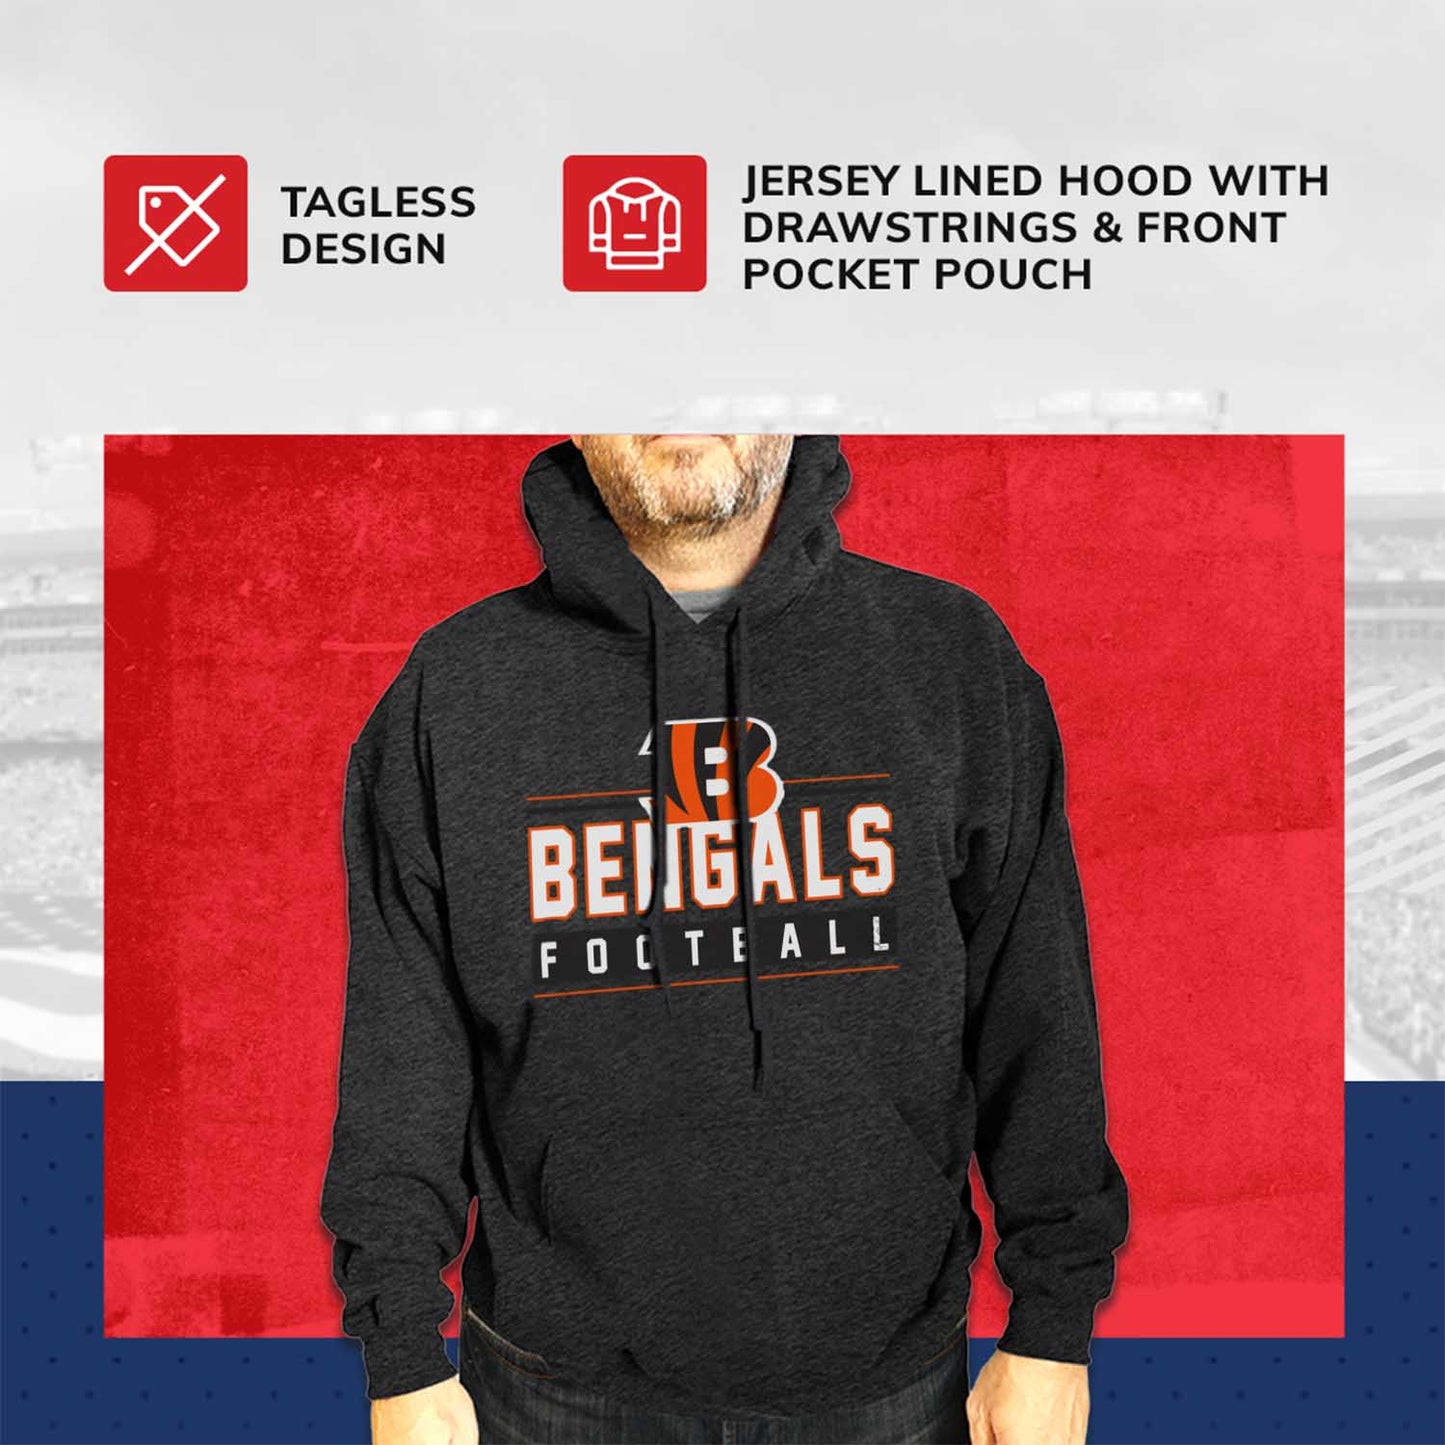 Cincinnati Bengals NFL Adult True Fan Hooded Charcoal Sweatshirt - Charcoal